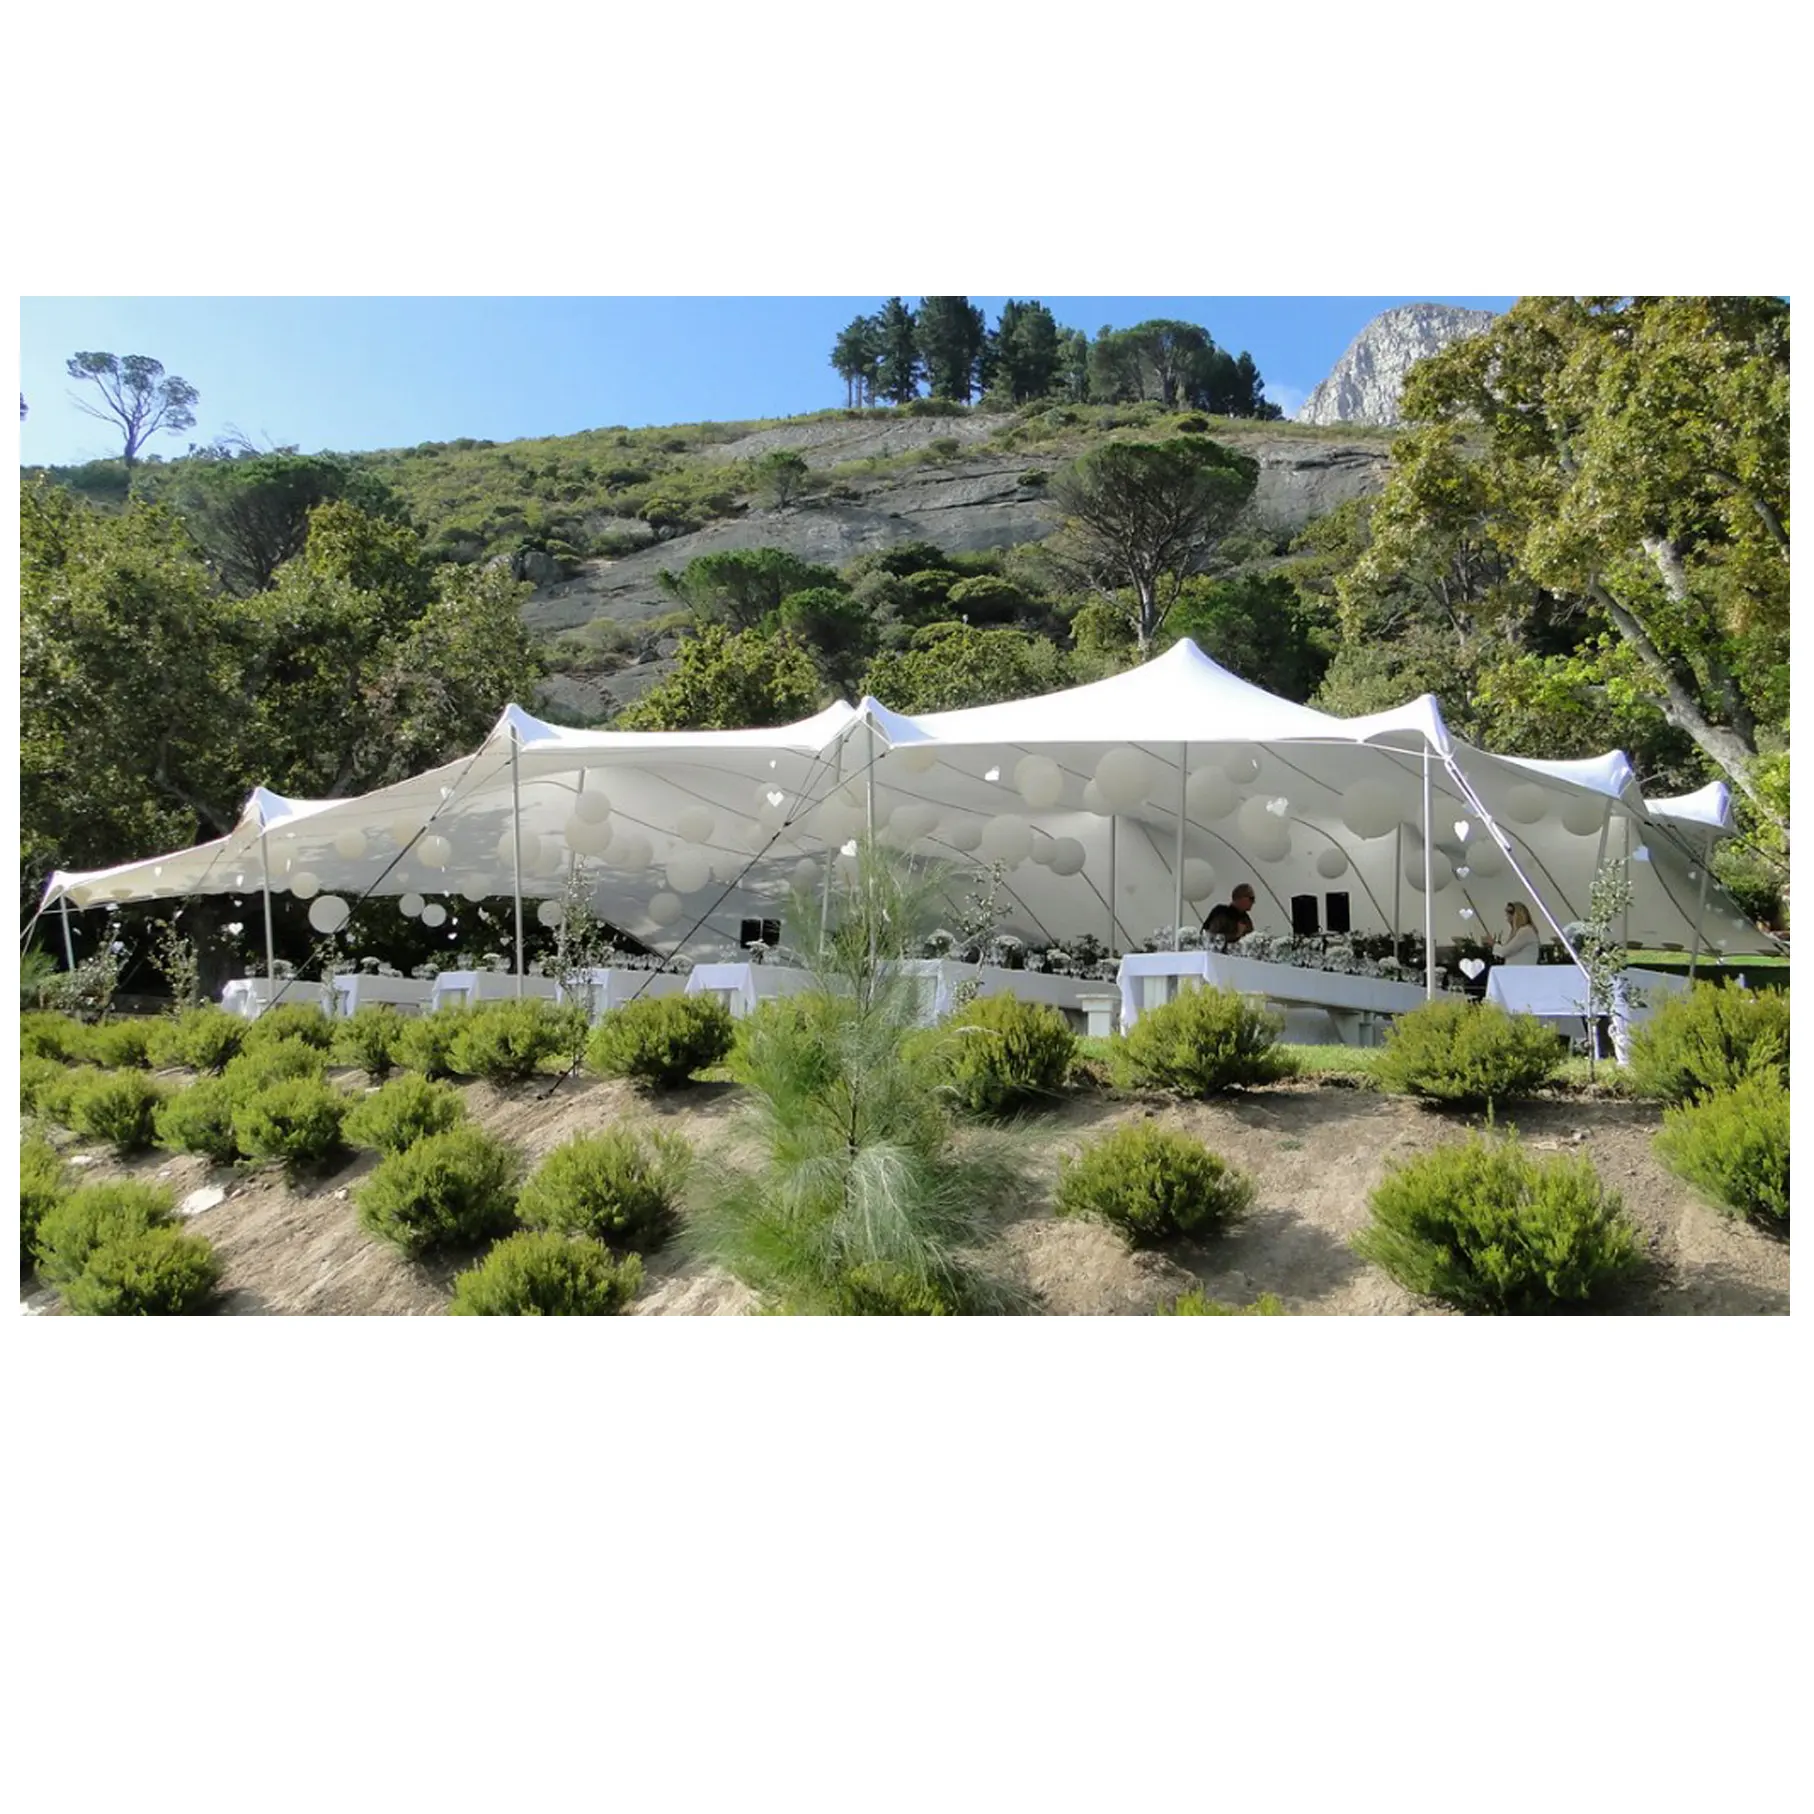 Dijual Tenda Acara Besar 200 Orang Warna Putih Murni/Tenda Pernikahan/Tenda Peregangan